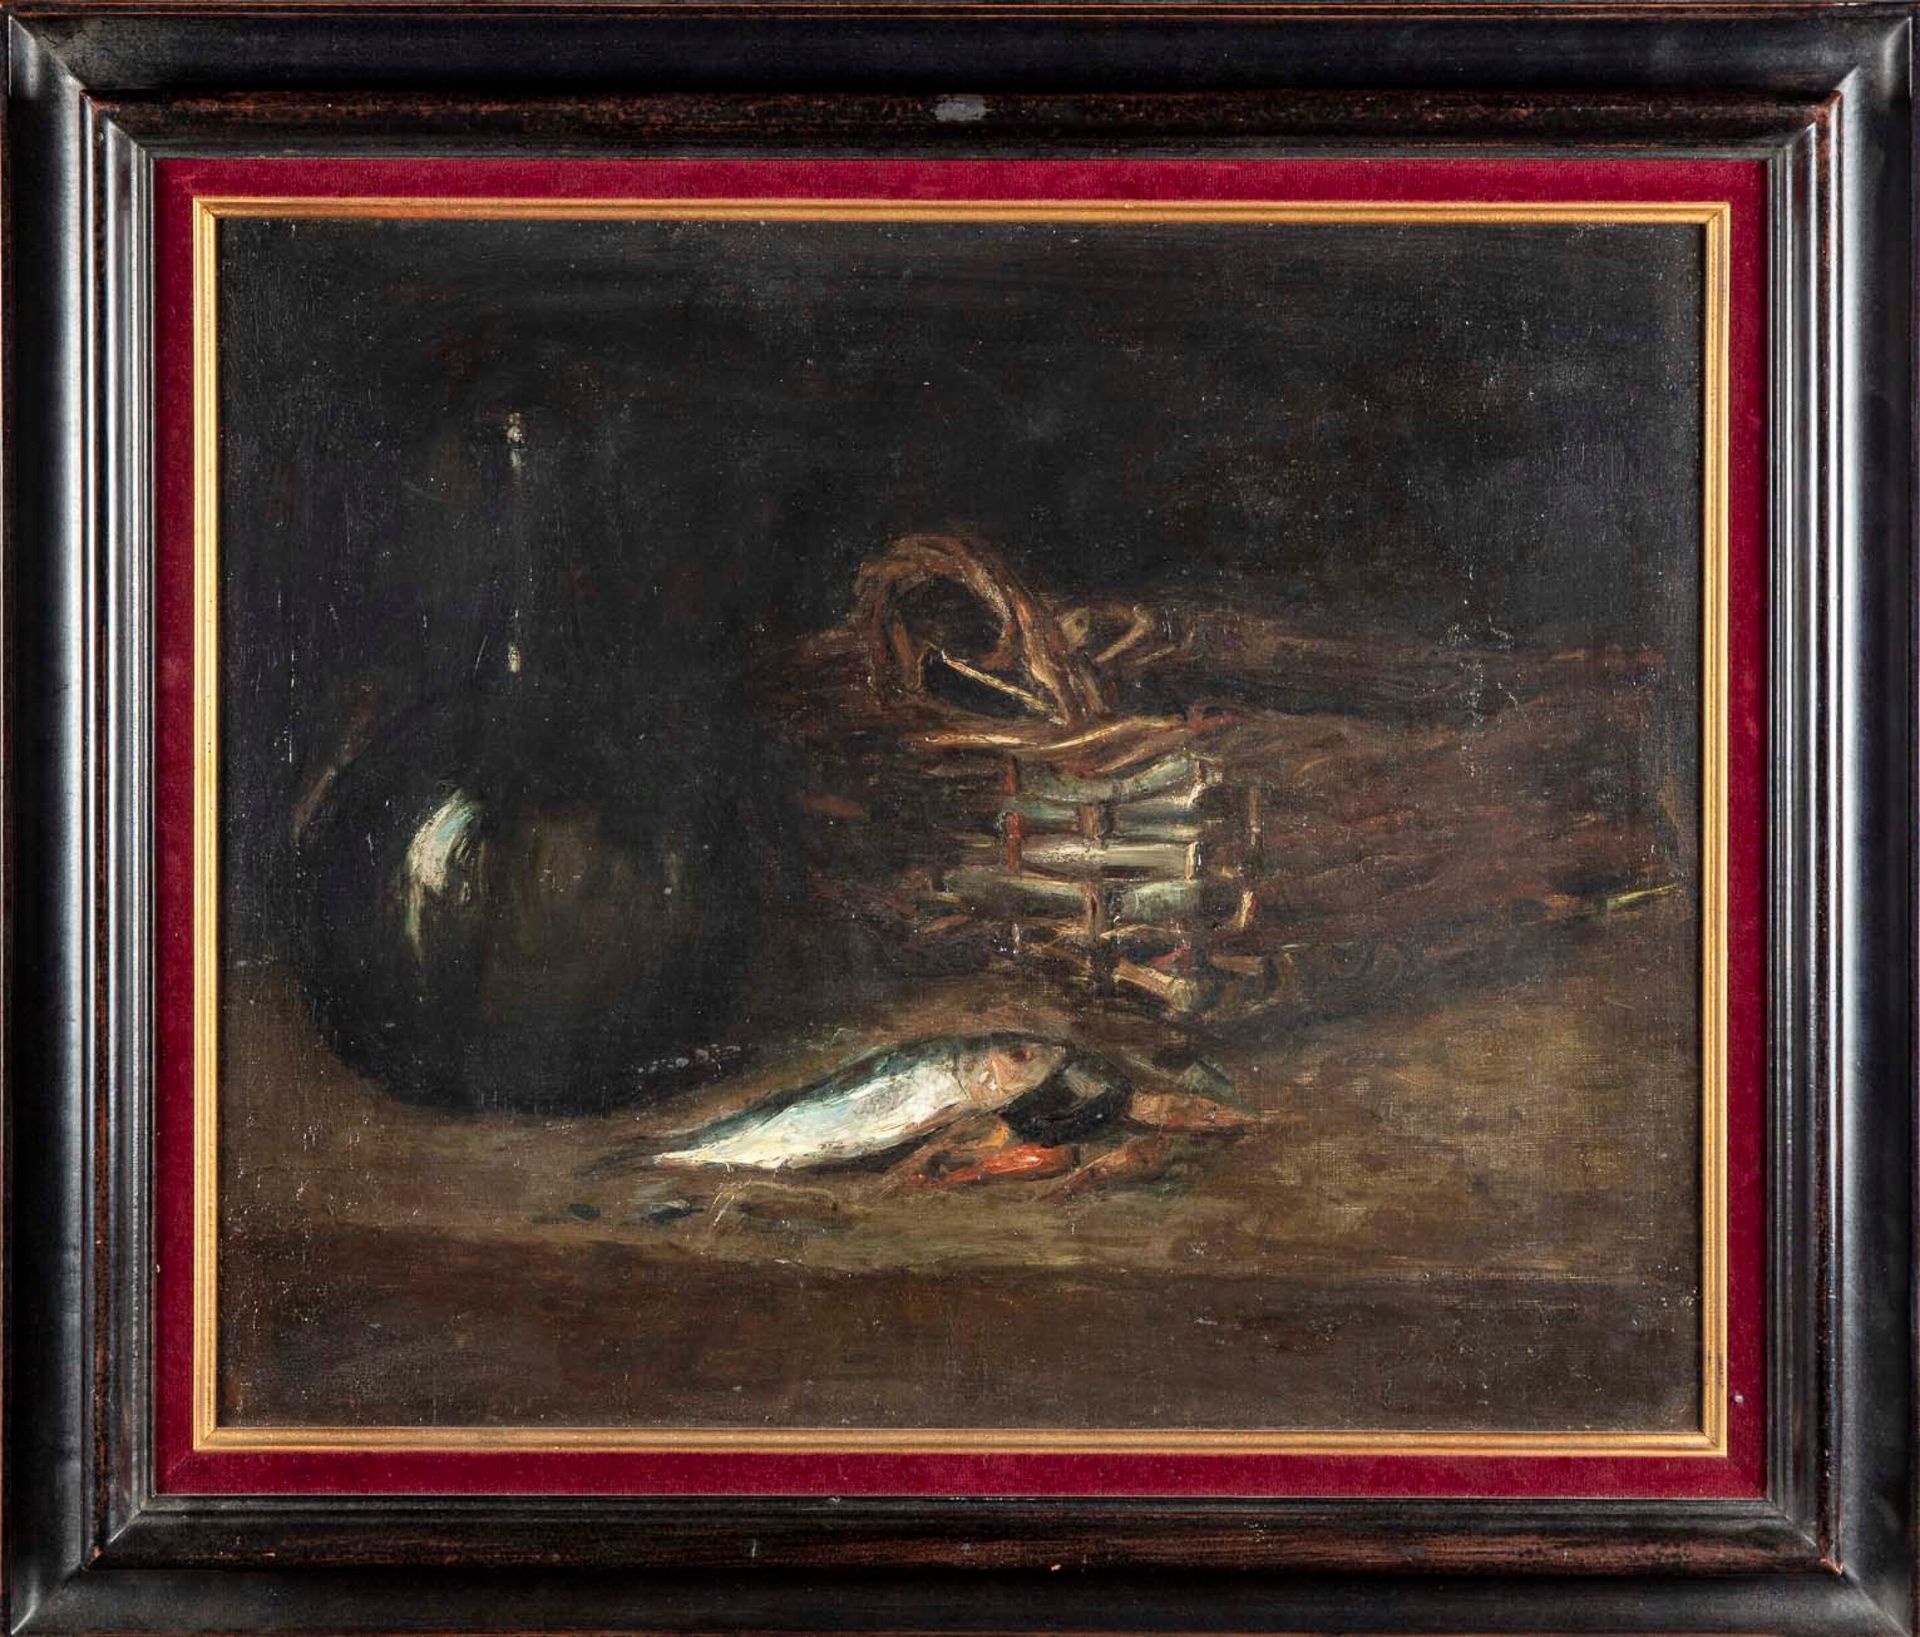 GERMAIN RIBAUT Germain RIBAUT (1845-1893)

Still life with sardines

Oil on canv&hellip;